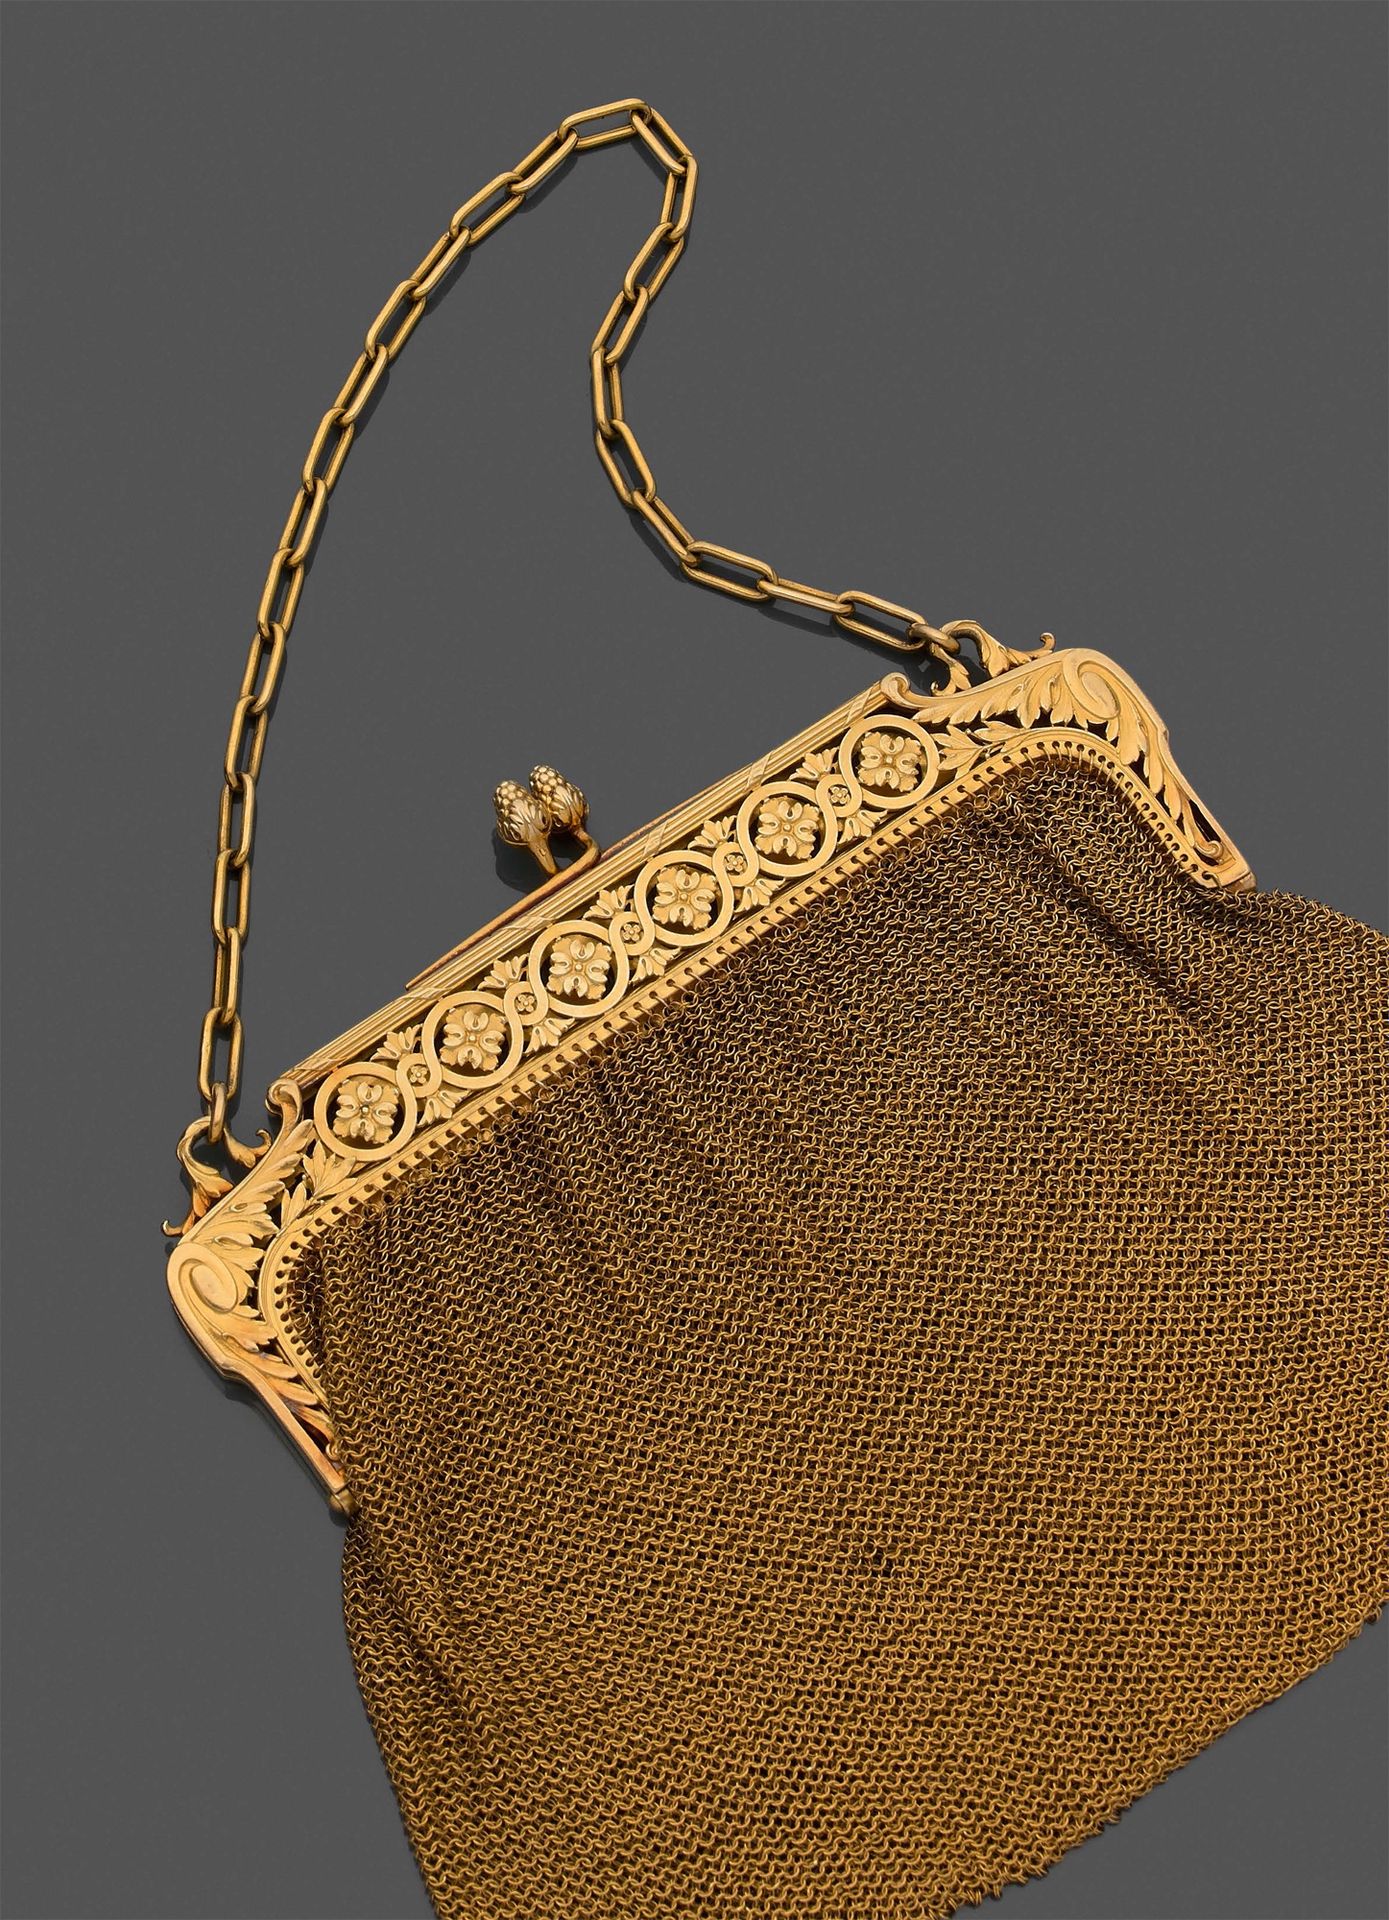 Null 晚装包及其链条，黄金链带（750‰）。
法国作品，约1900年。
尺寸：13 x 11,5 cm - 重量：226,2 g